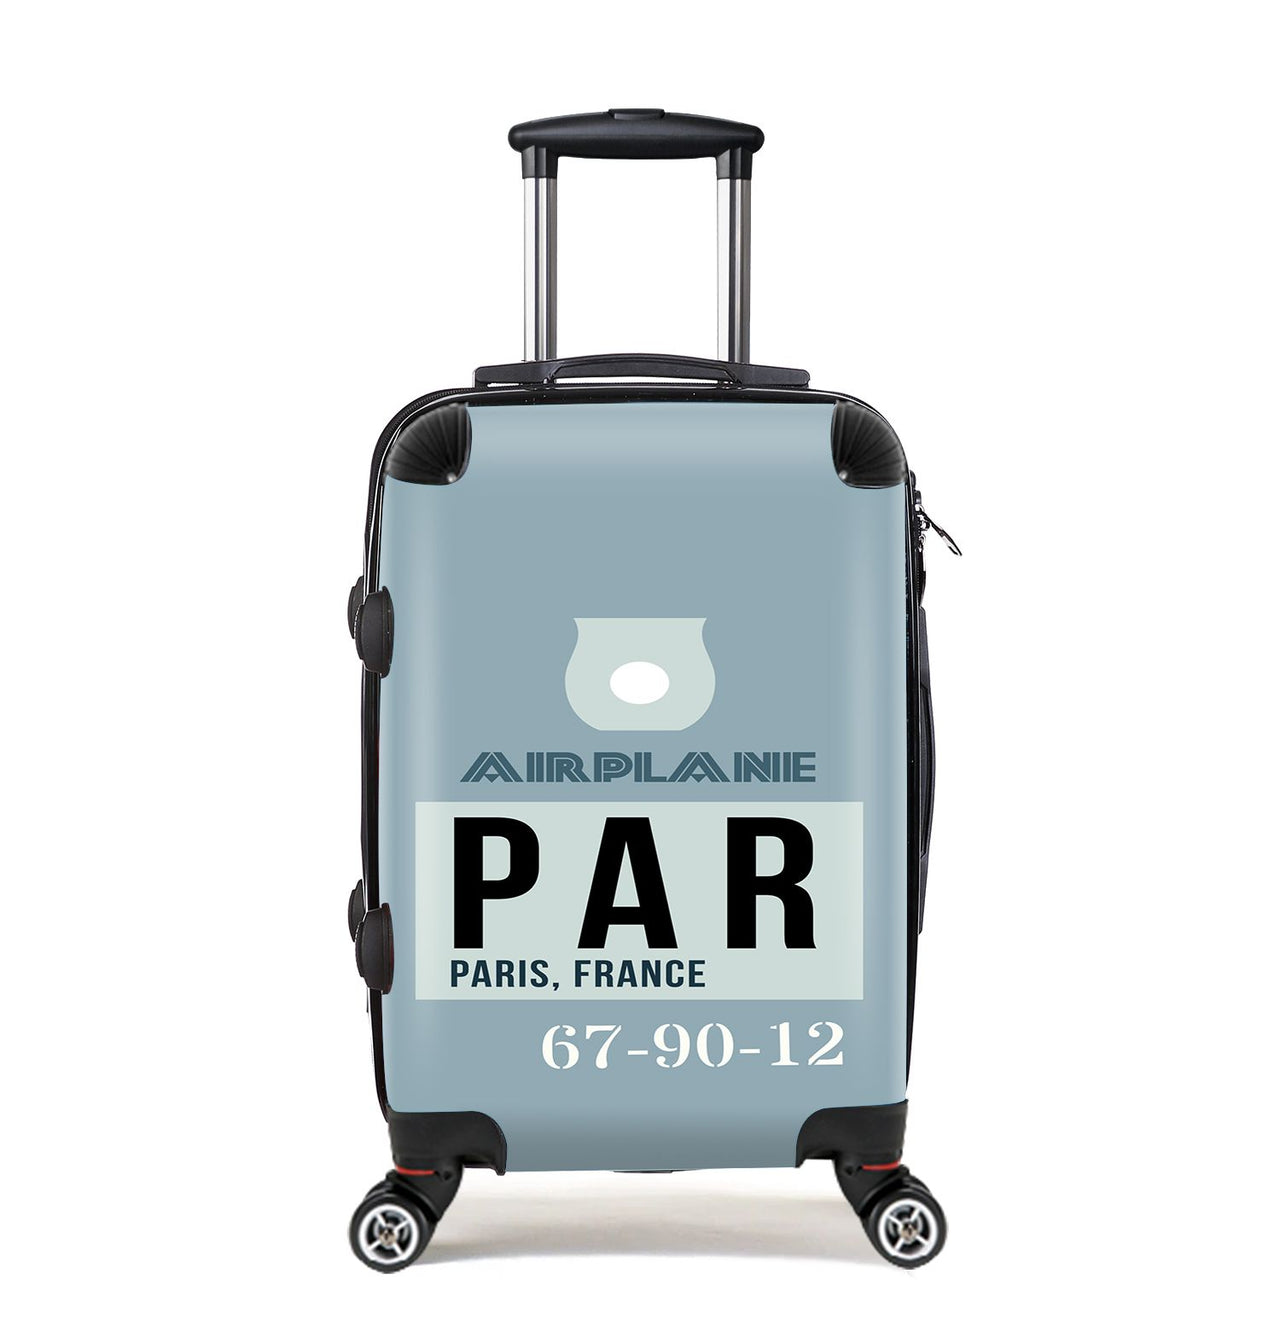 PAR - Paris France Luggage Tag Designed Cabin Size Luggages